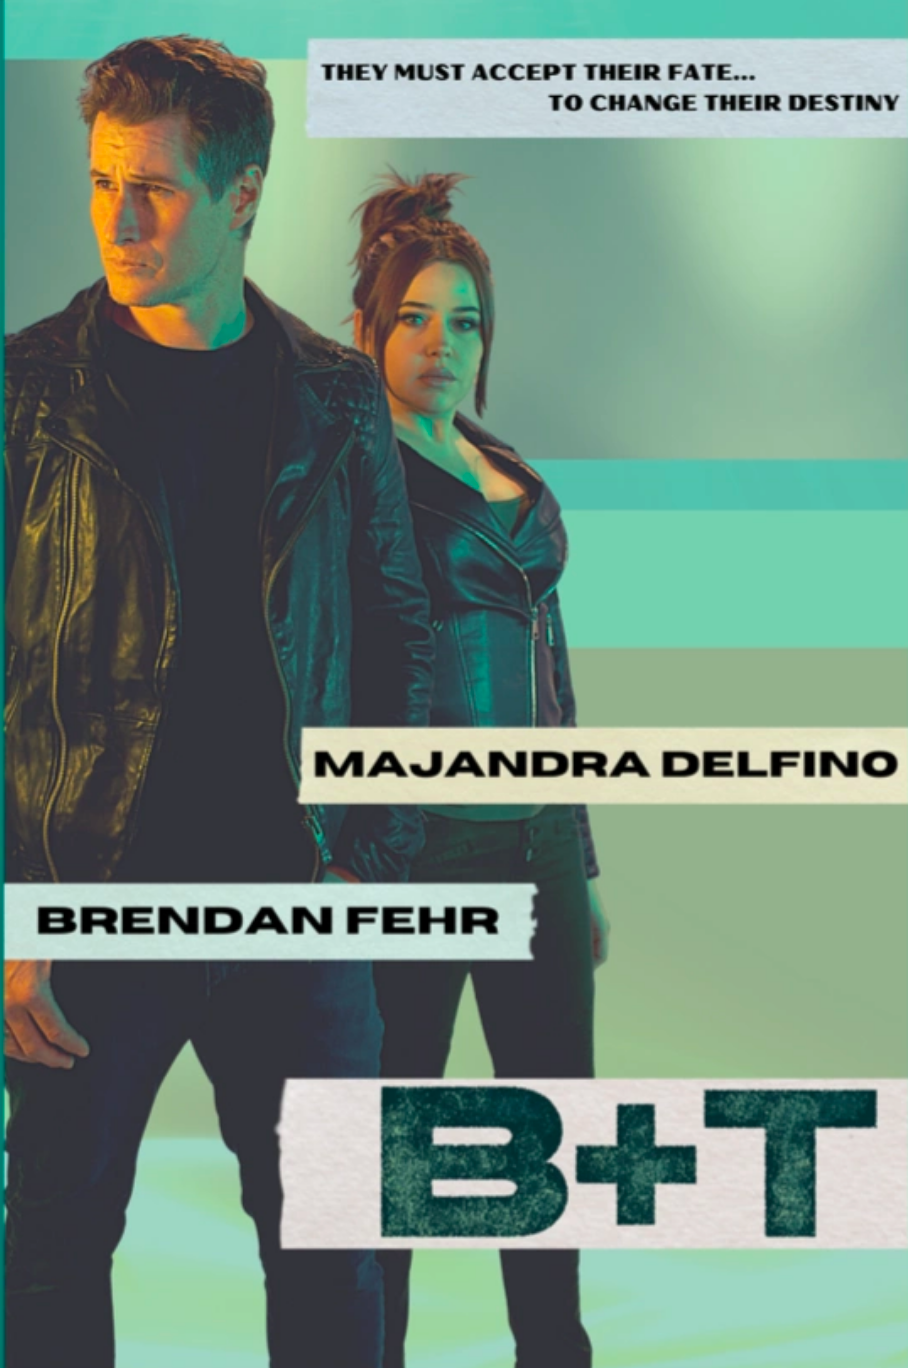 Majandra Delfino as Toluca Mendez and Brendan Fehr as Jake Baron